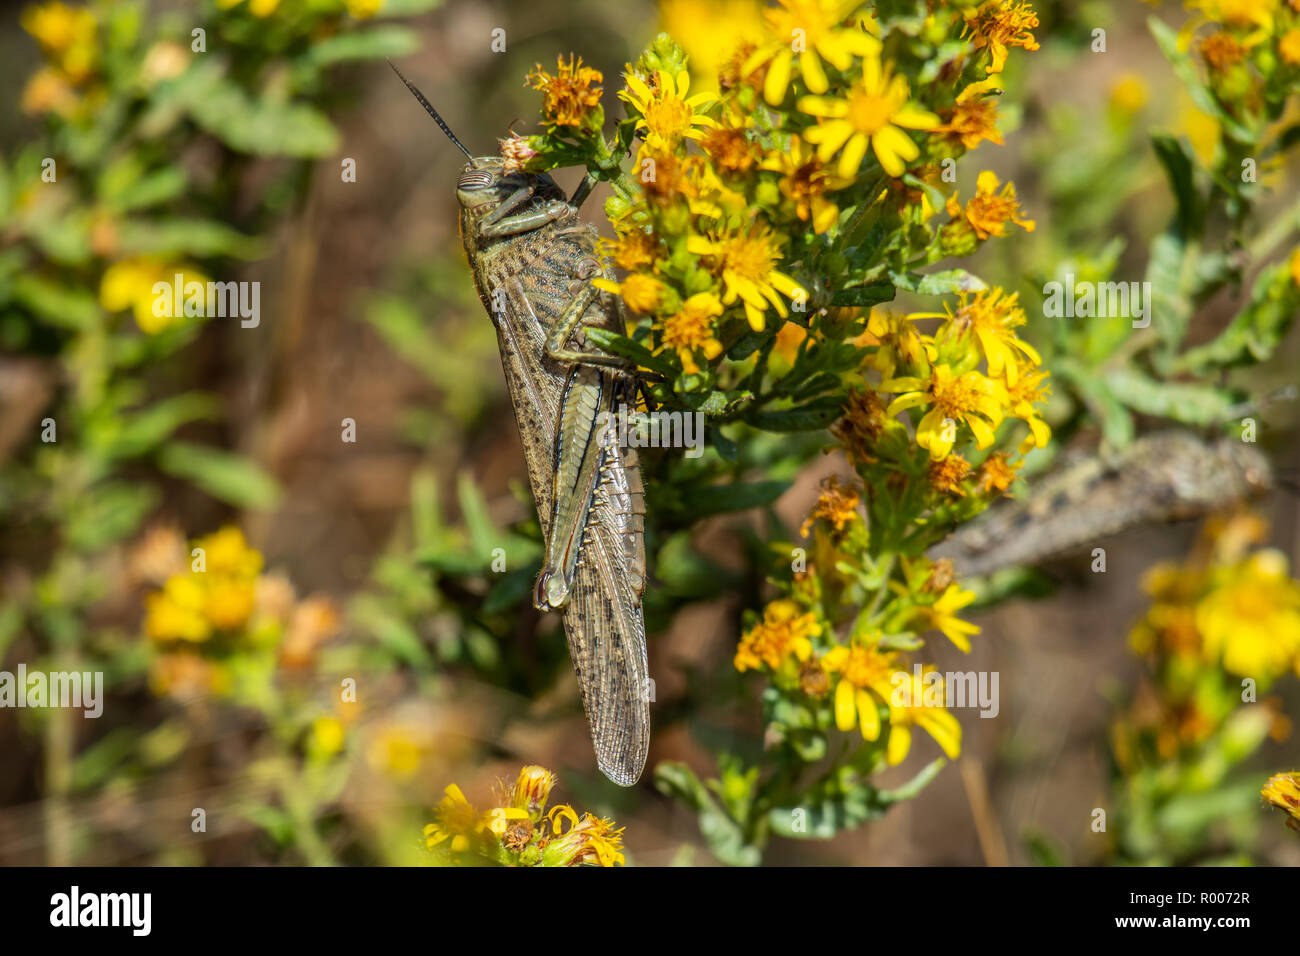 Anacridium aegyptium, the Egyptian locust Stock Photo